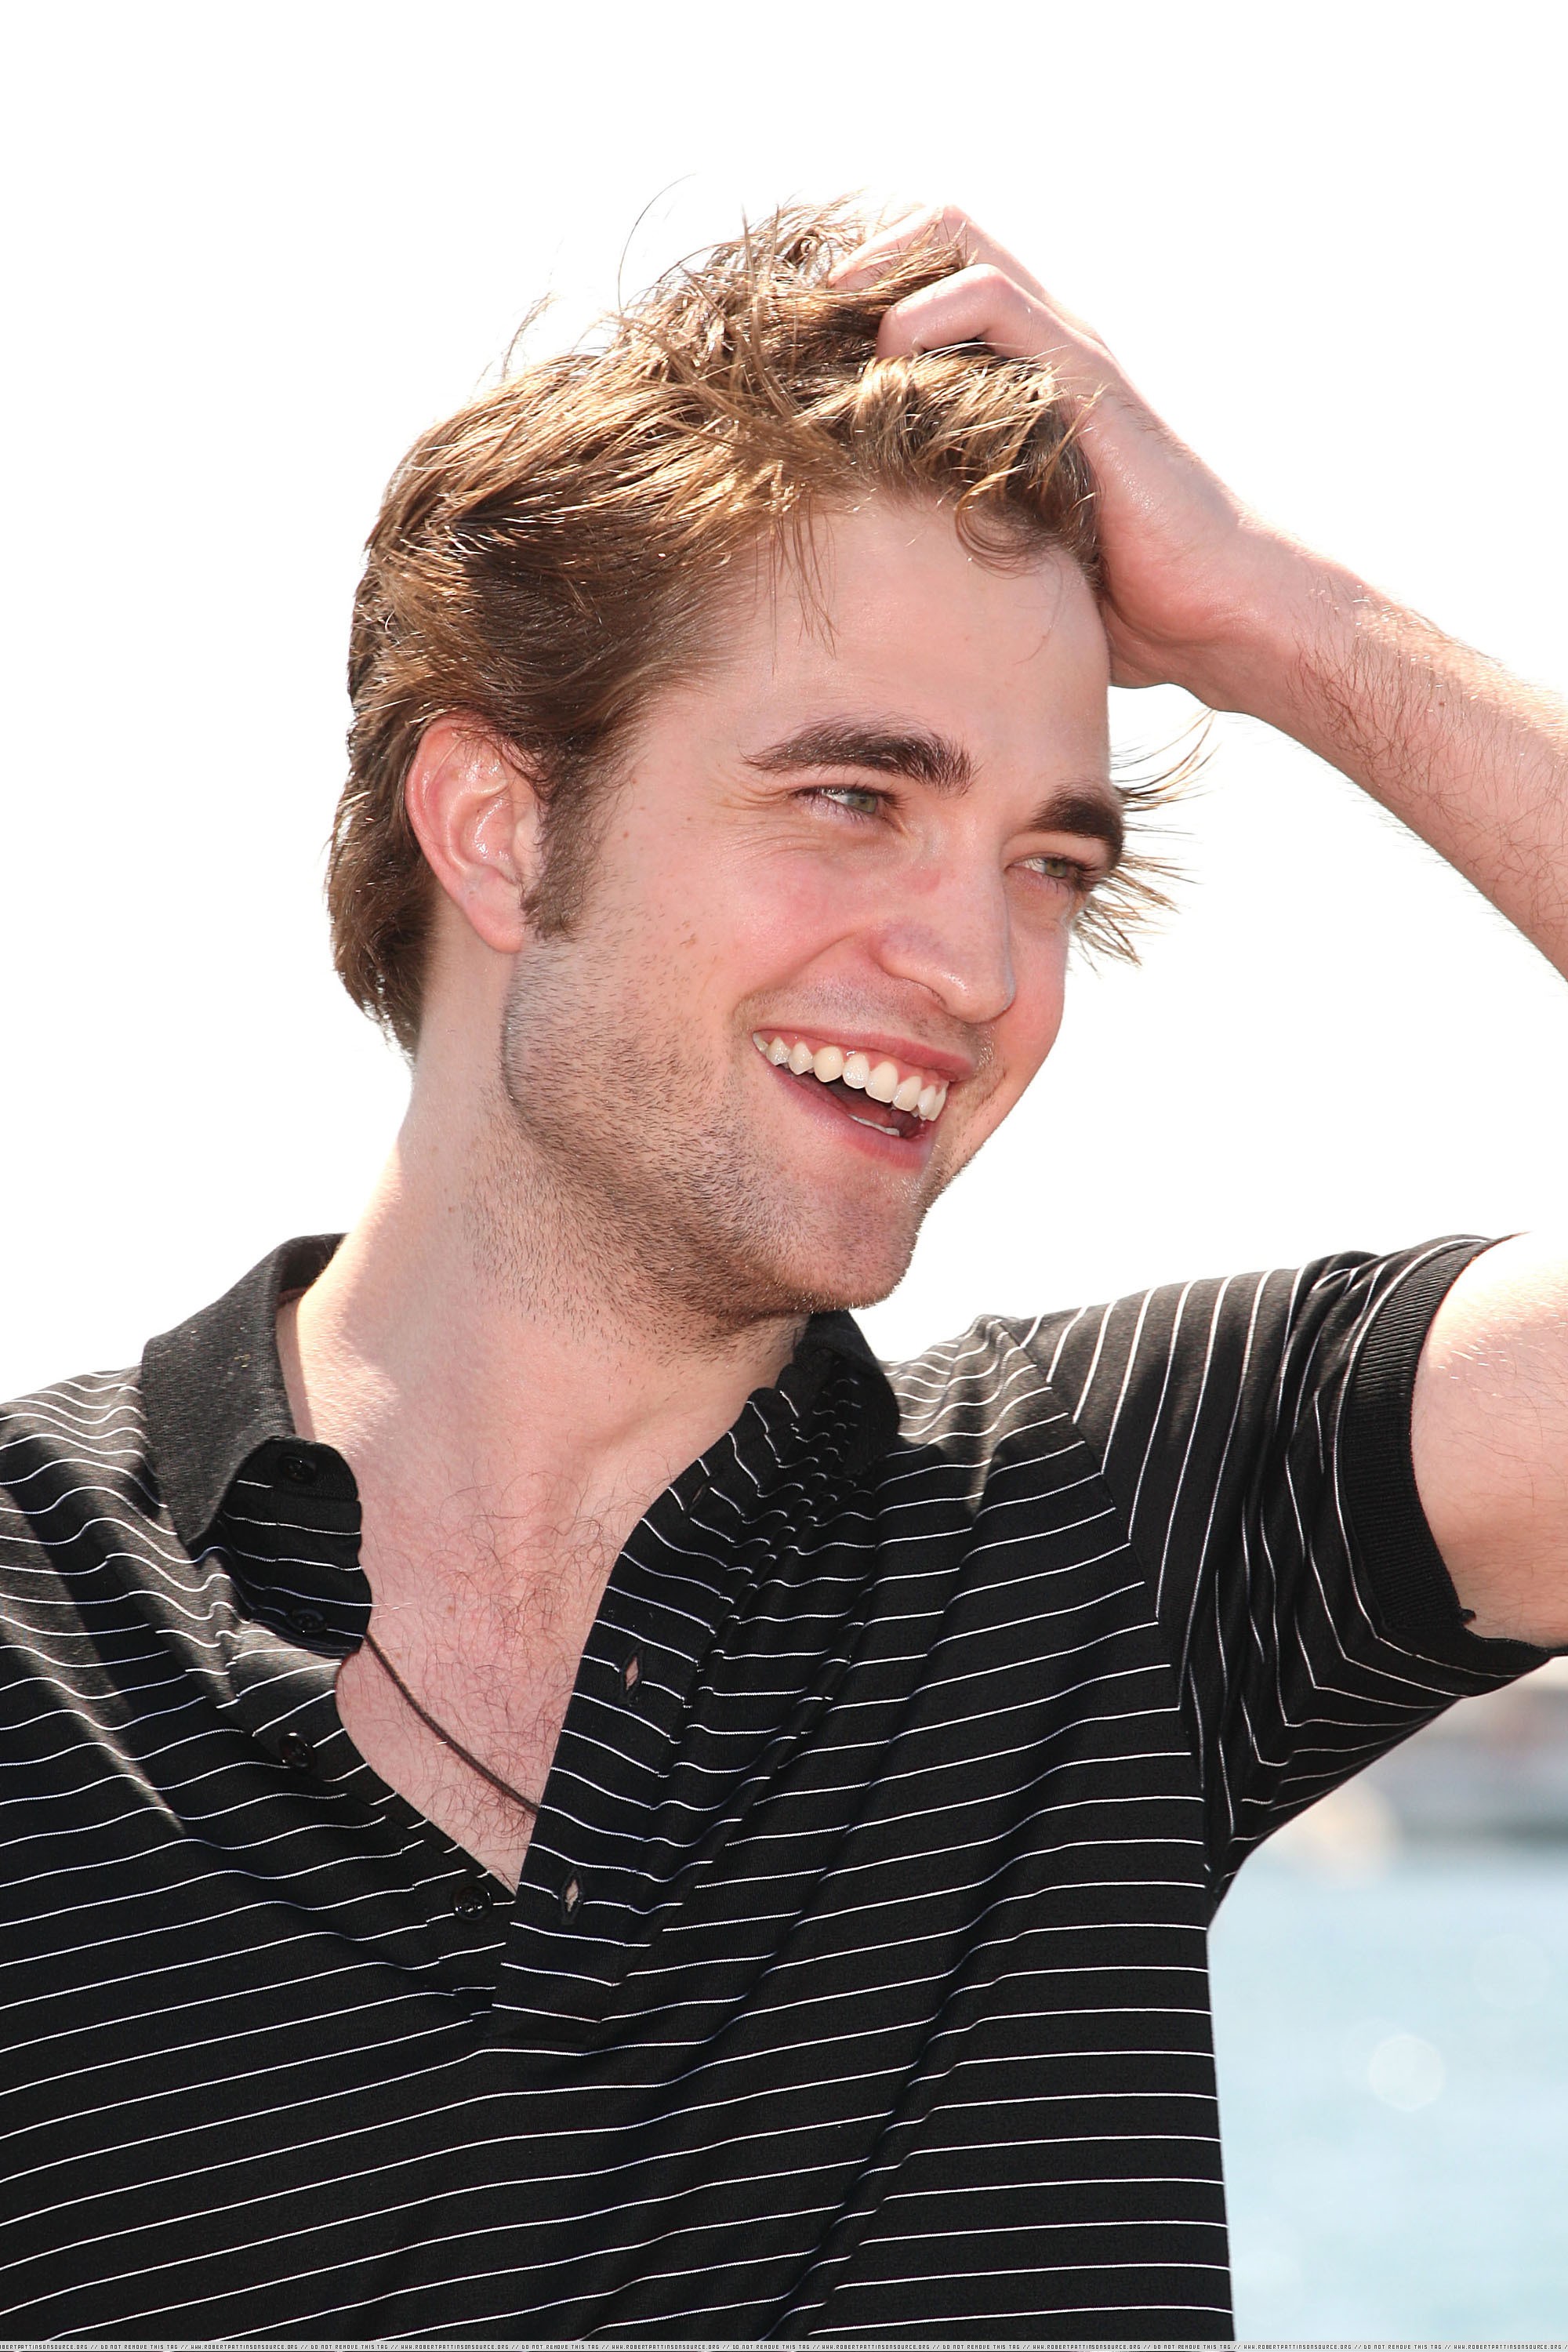 General photo of Robert Pattinson